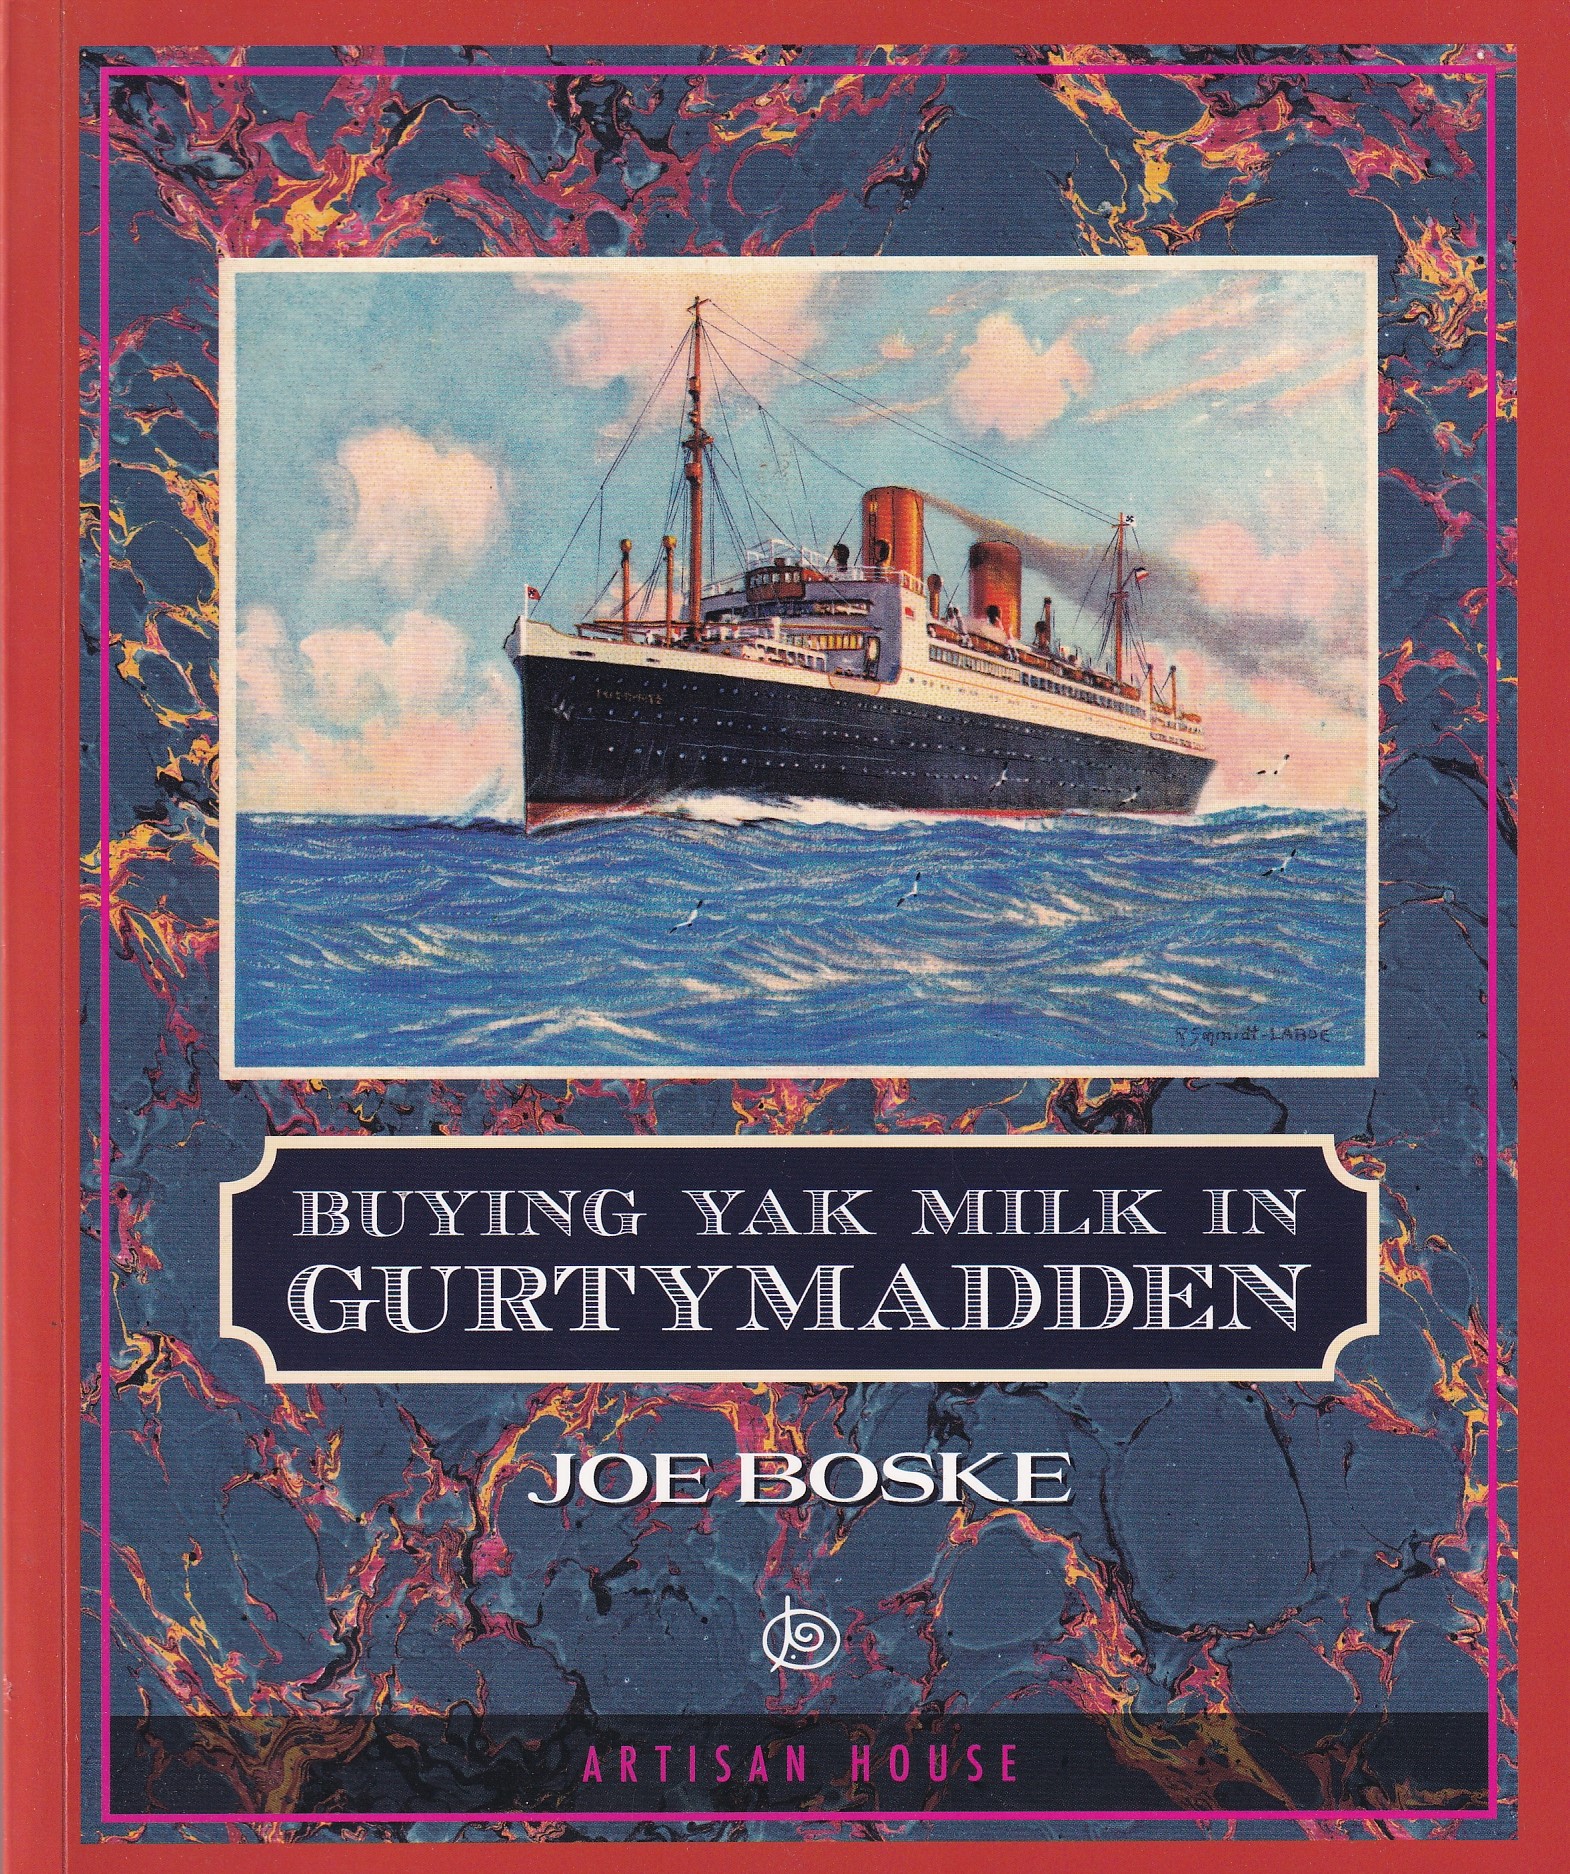 Buying Yak Milk in Gurtymadden [Signed] | Joe Boske | Charlie Byrne's